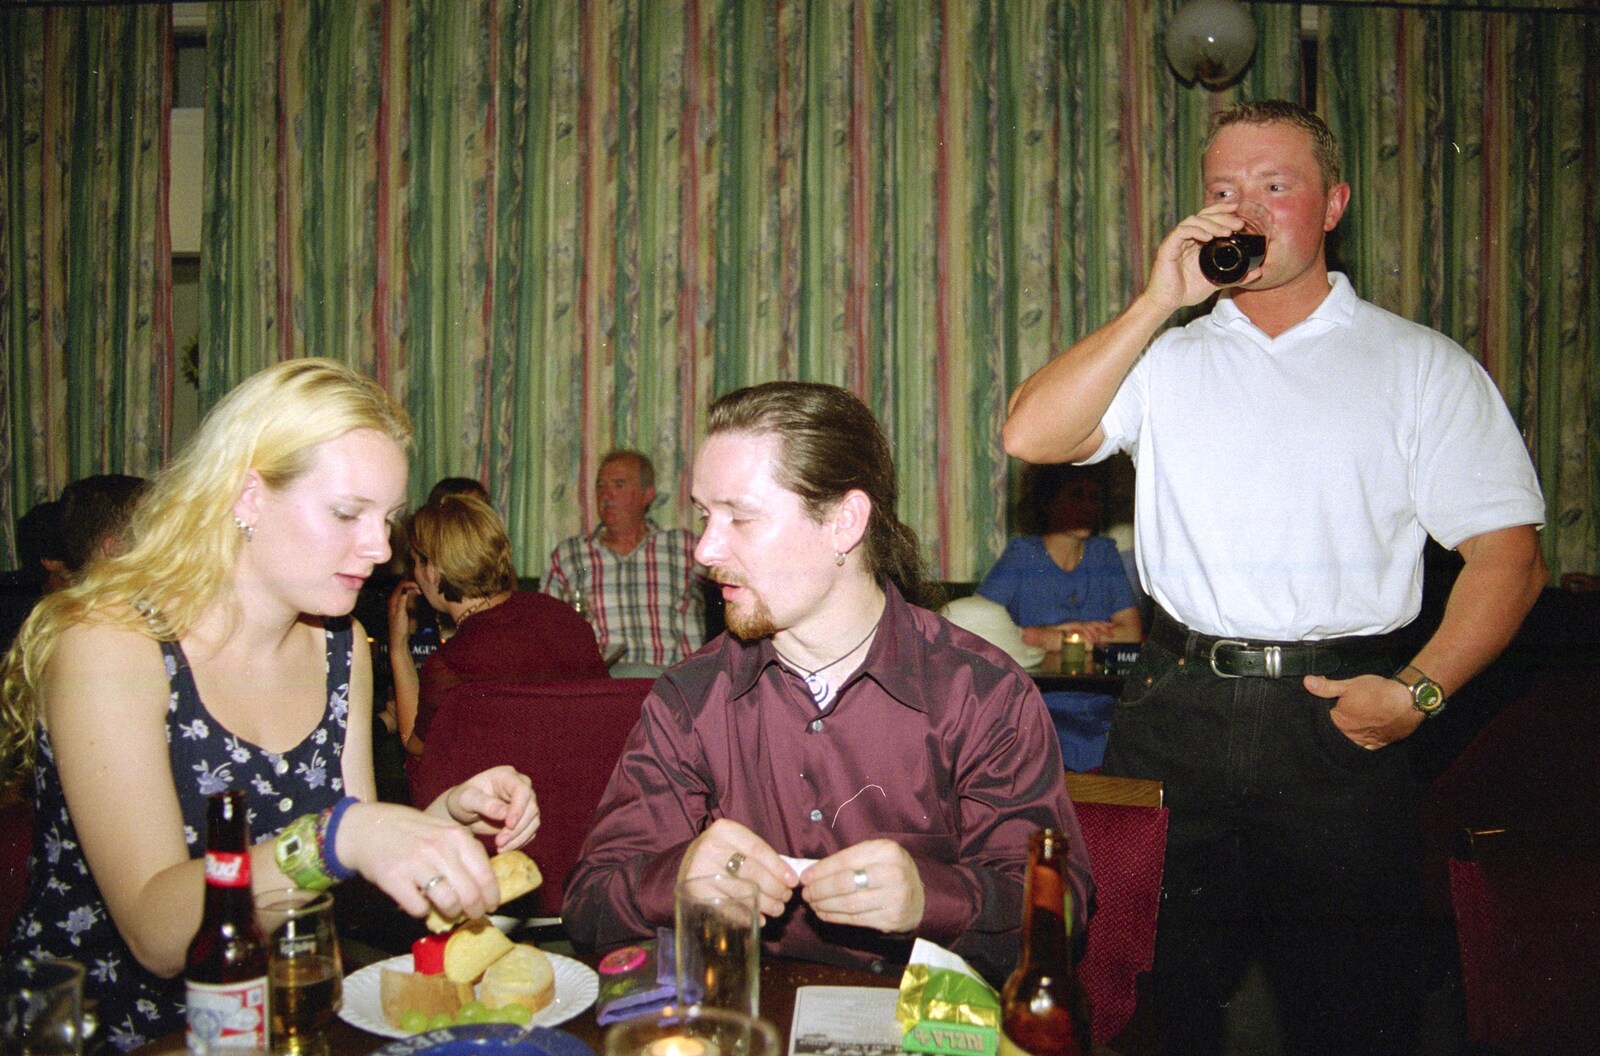 Fenton and his girlfriend from Joe and Lesley's CISU Wedding, Ipswich, Suffolk - 30th July 1998